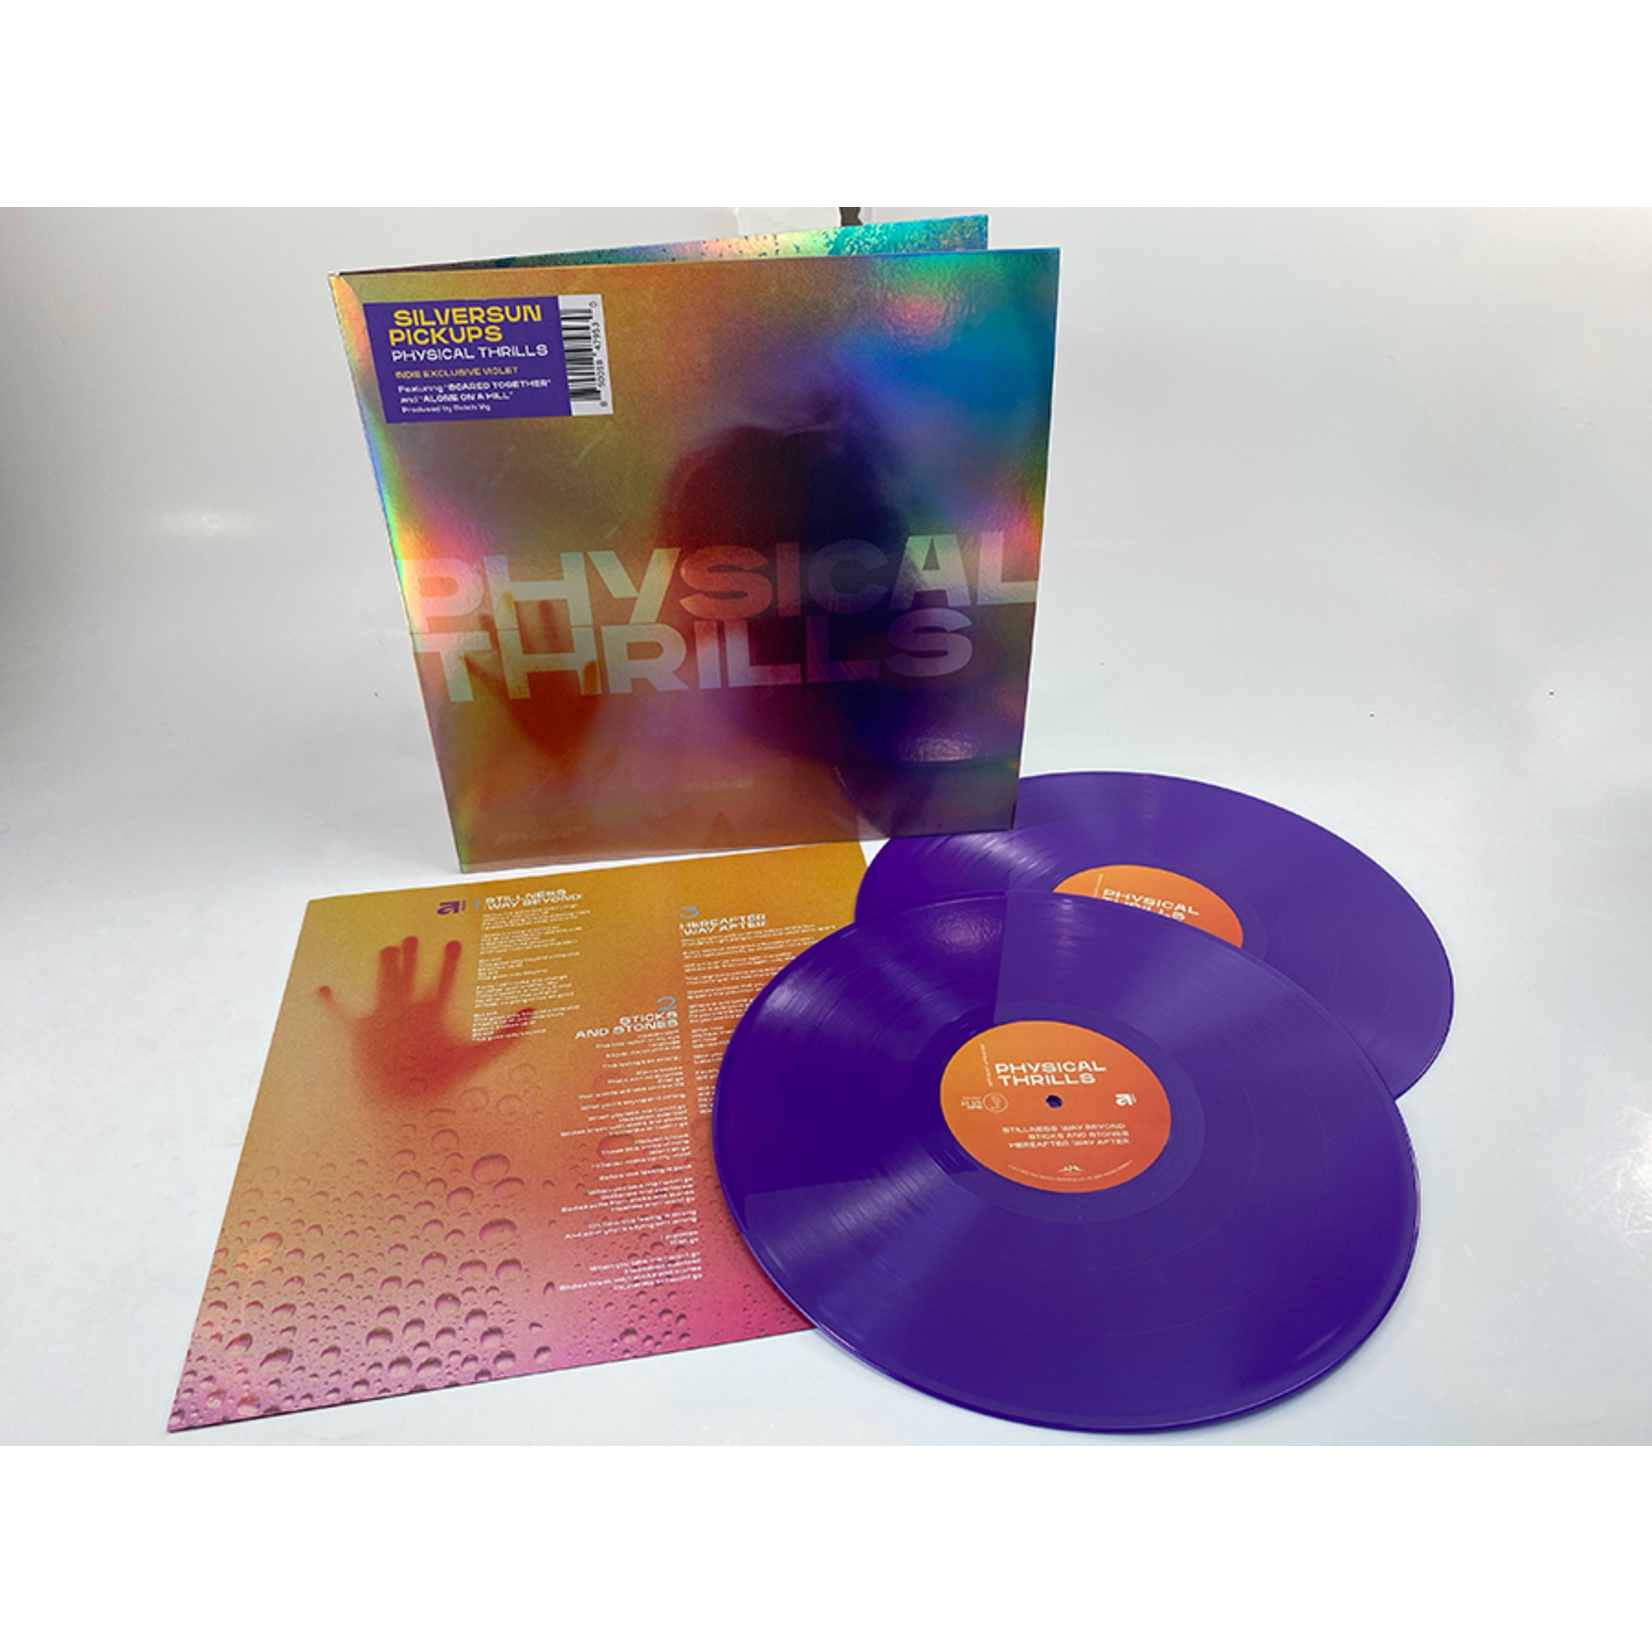 [New] Silversun Pickups - Physical Thrills (2LP, violet vinyl, indie exclusive)